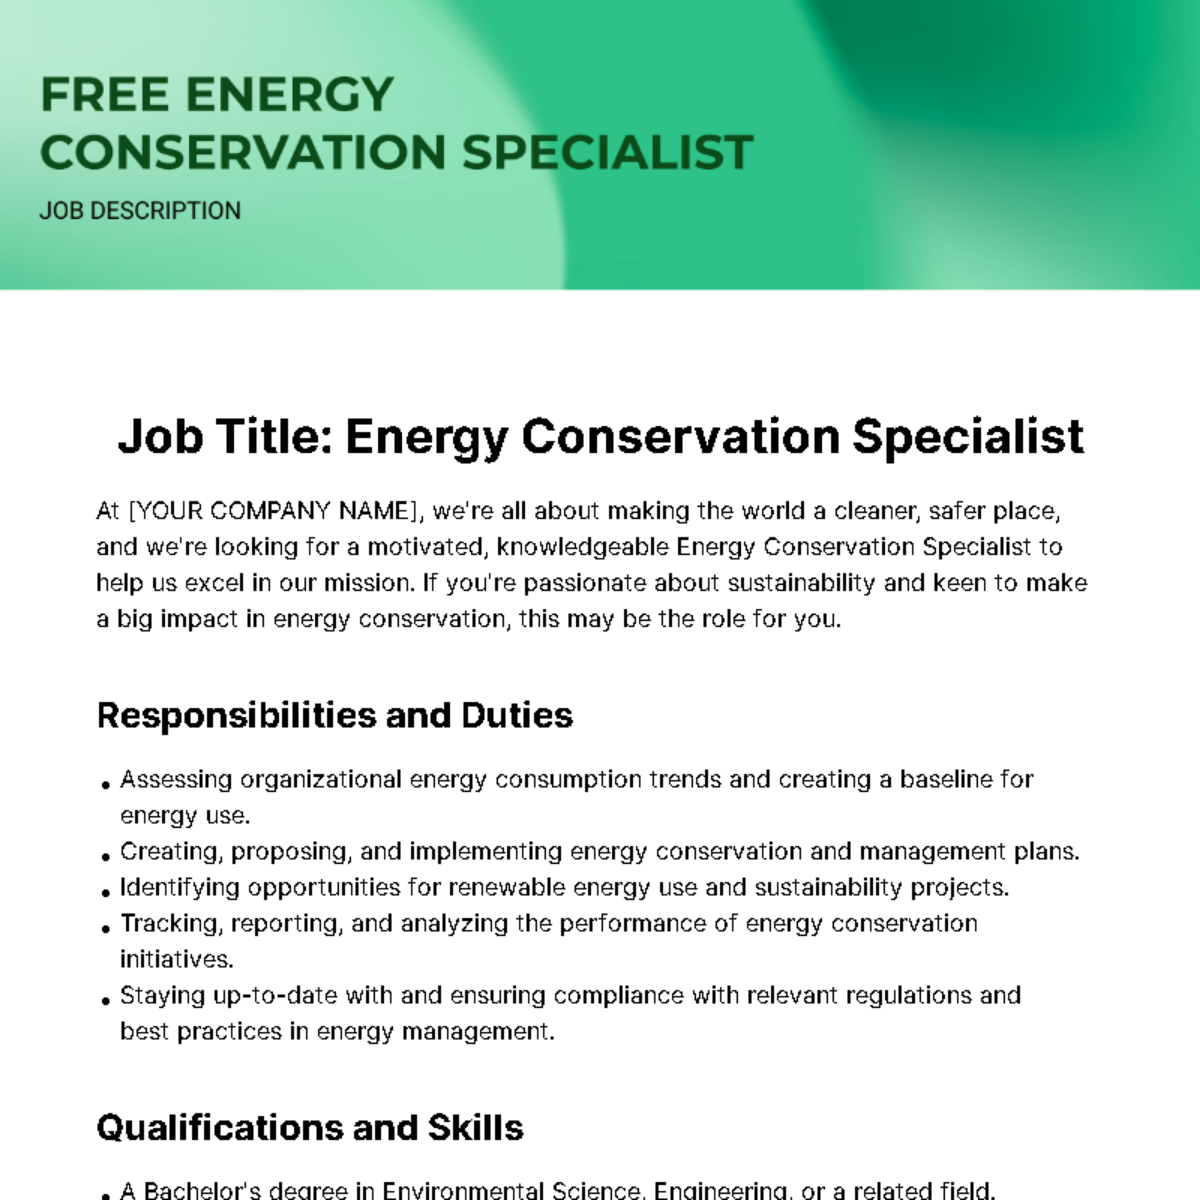 Free Energy Conservation Specialist Job Description Template